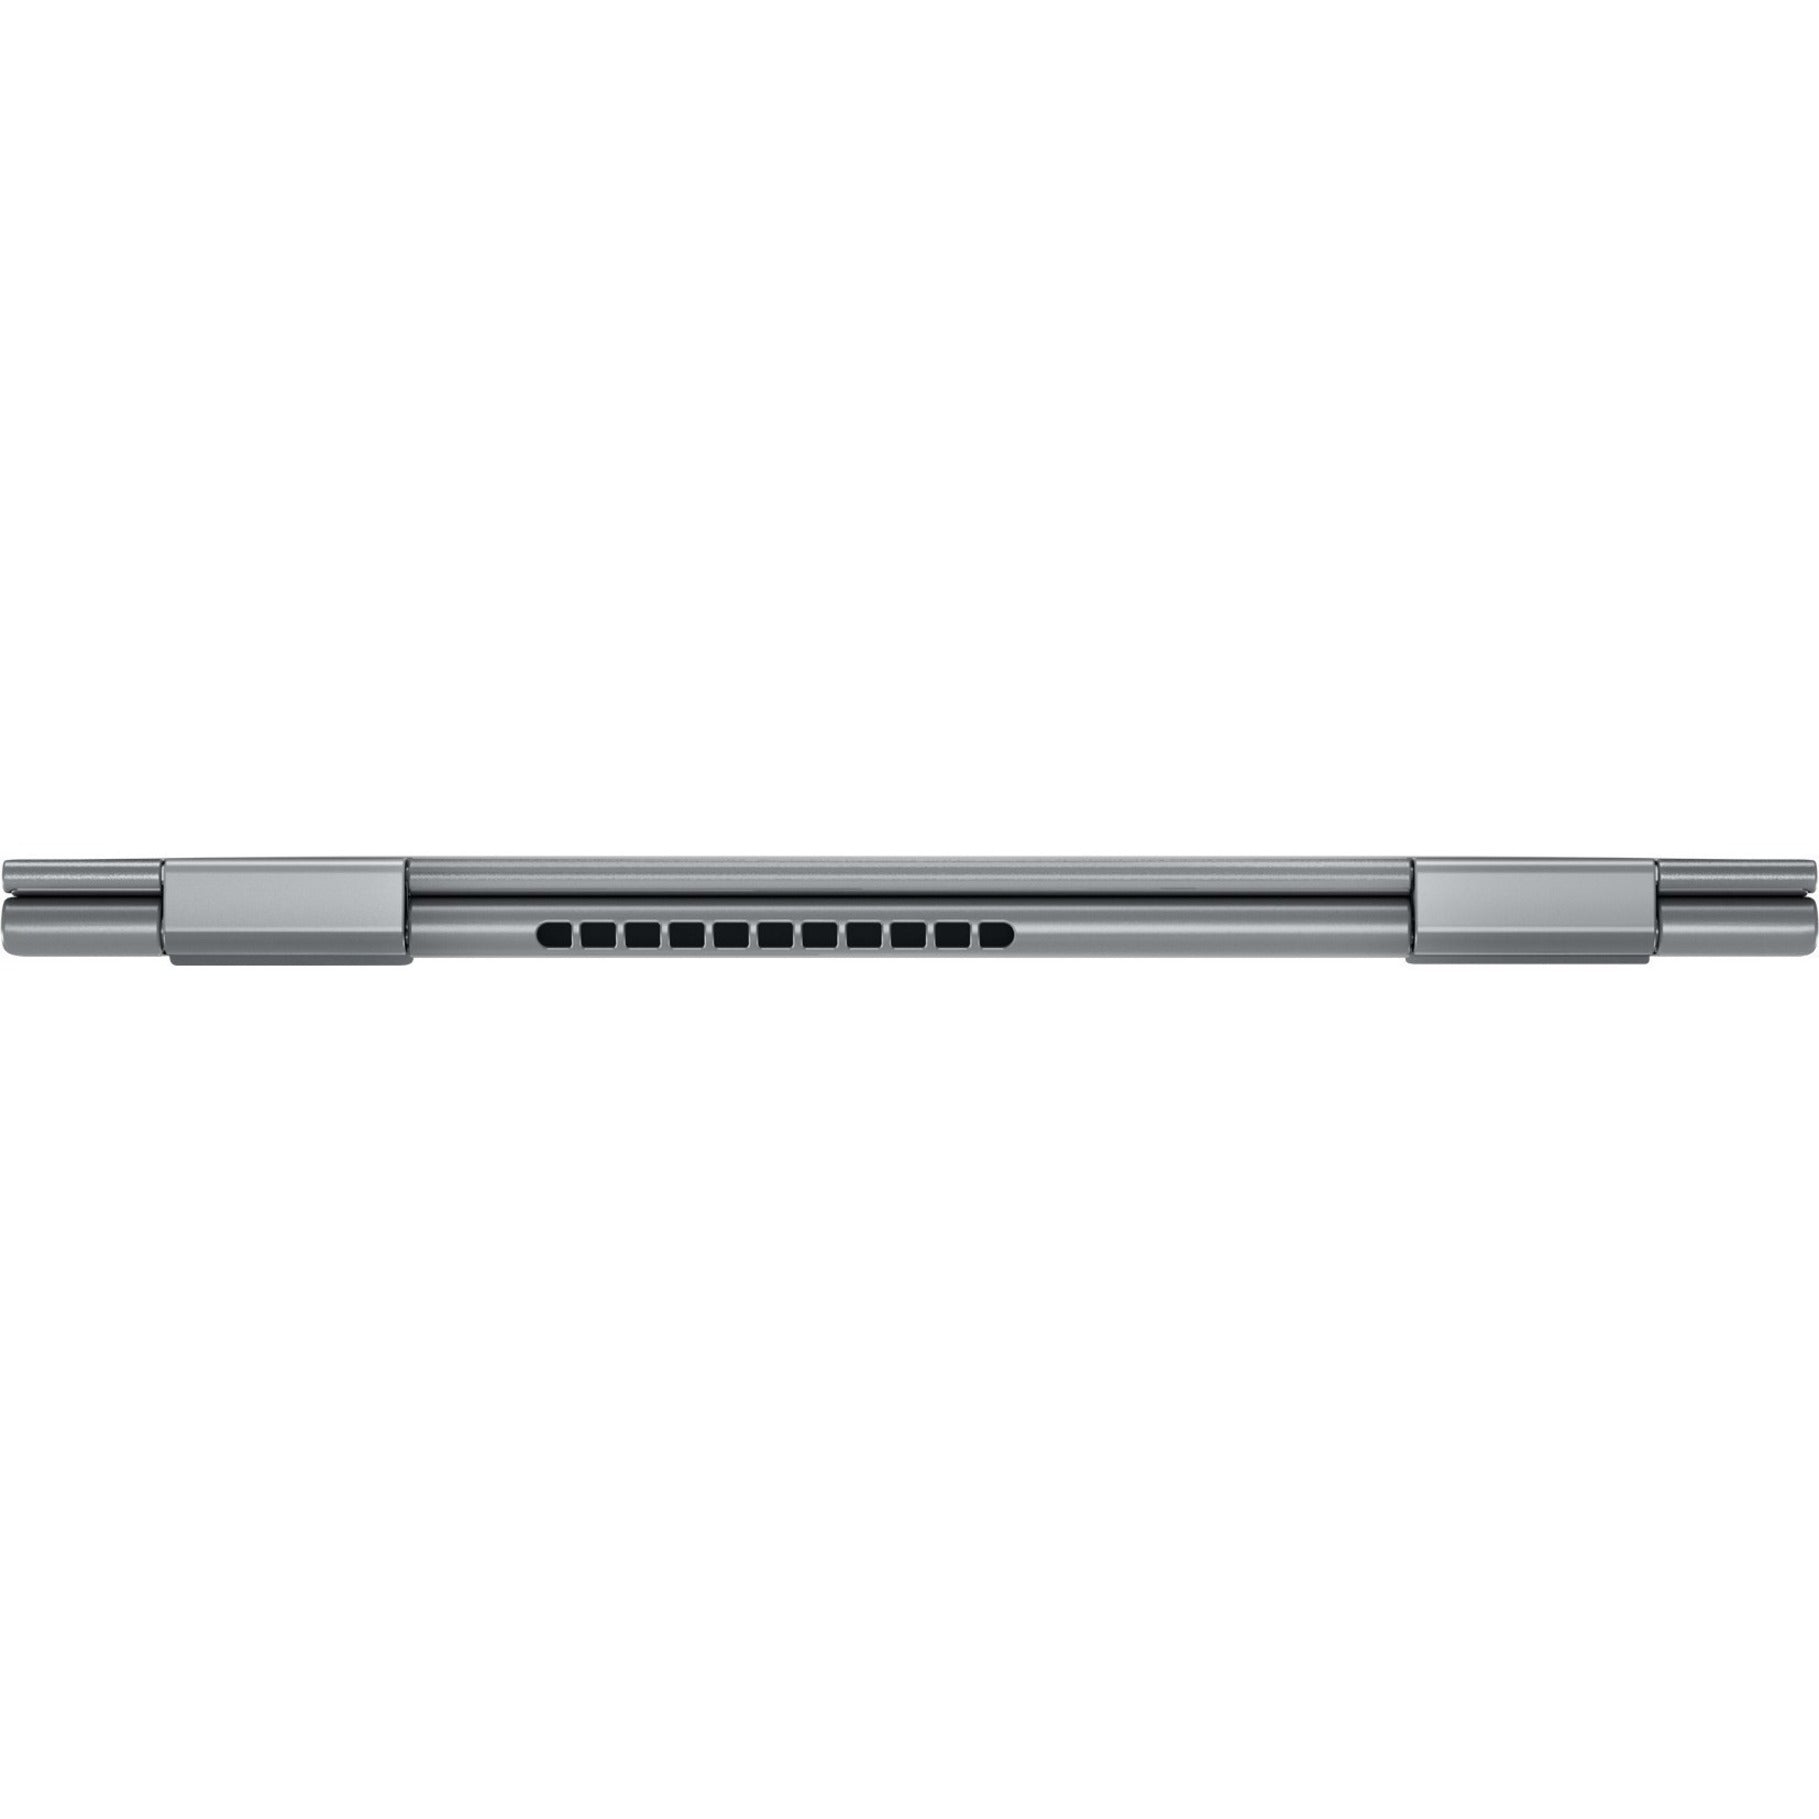 Lenovo ThinkPad X1 Yoga Gen 7 2-in-1 Notebook - Core i7, 16GB RAM, 512GB SSD, Windows 11 [Discontinued]